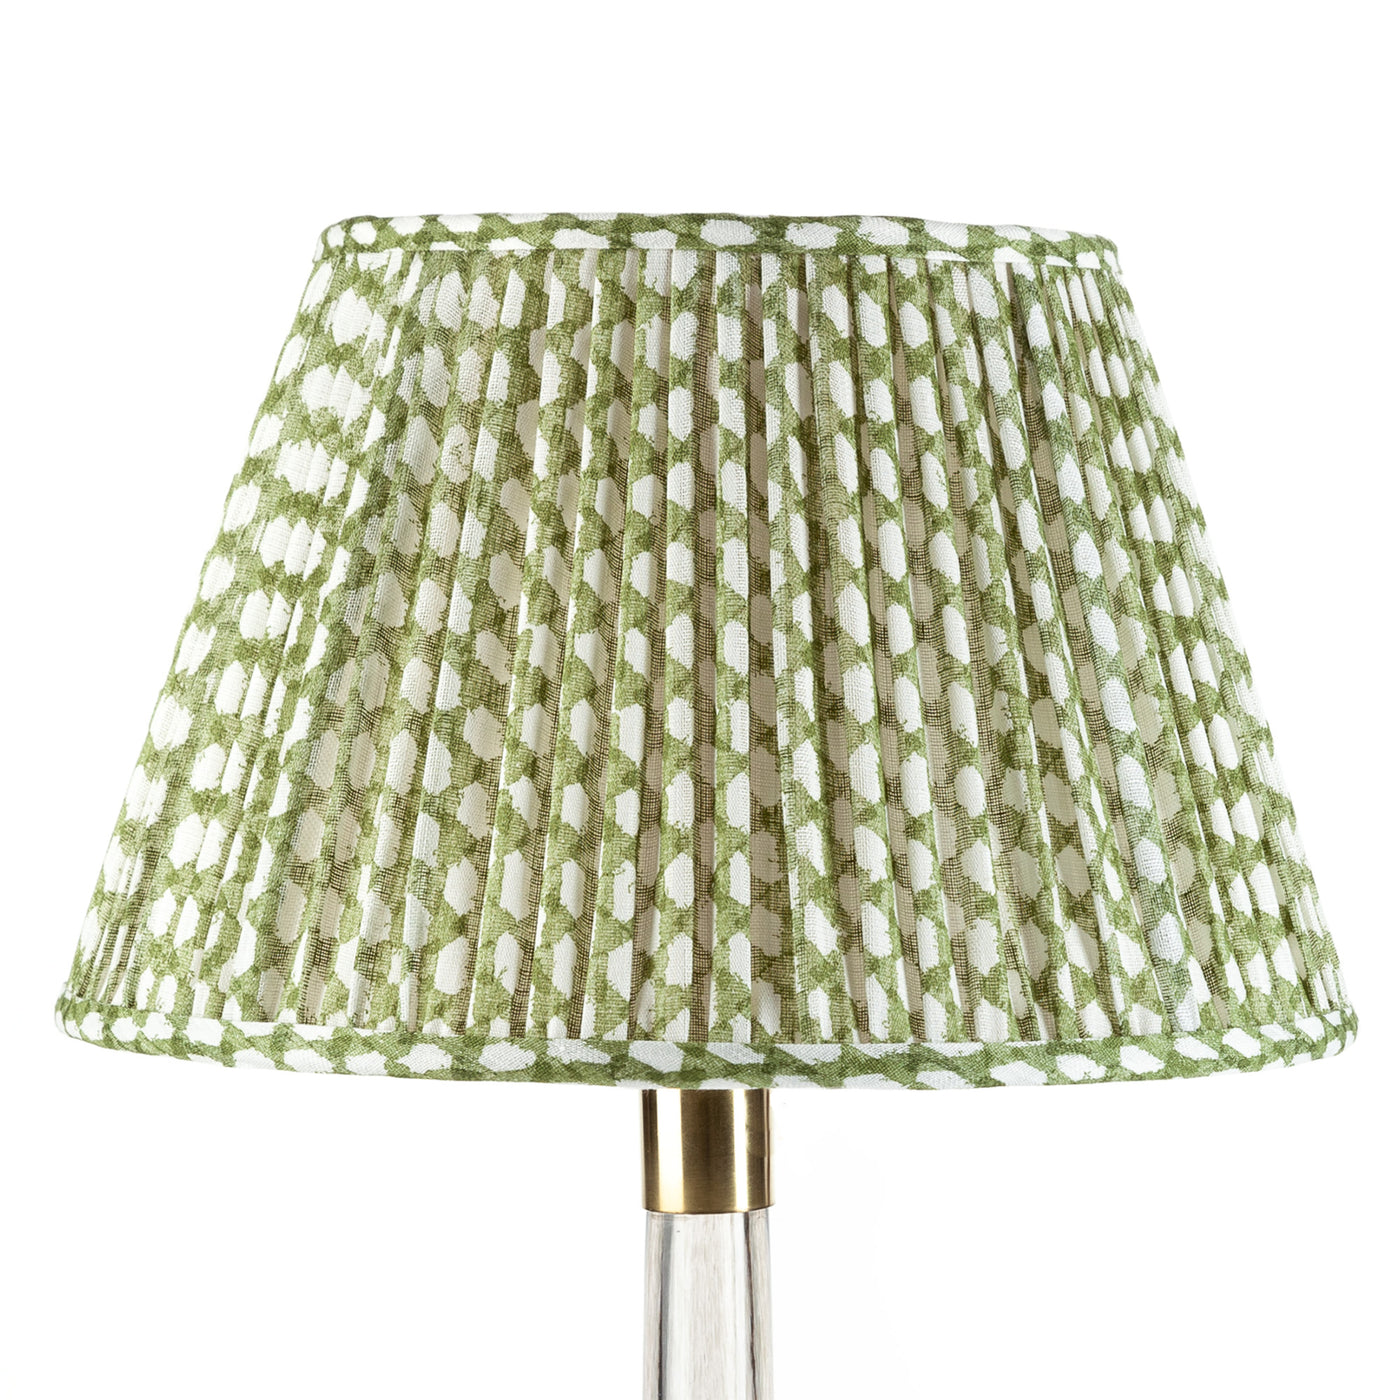 4.5" Fermoie Lampshade - Wicker in Green  | Newport Lamp And Shade | Located in Newport, RI